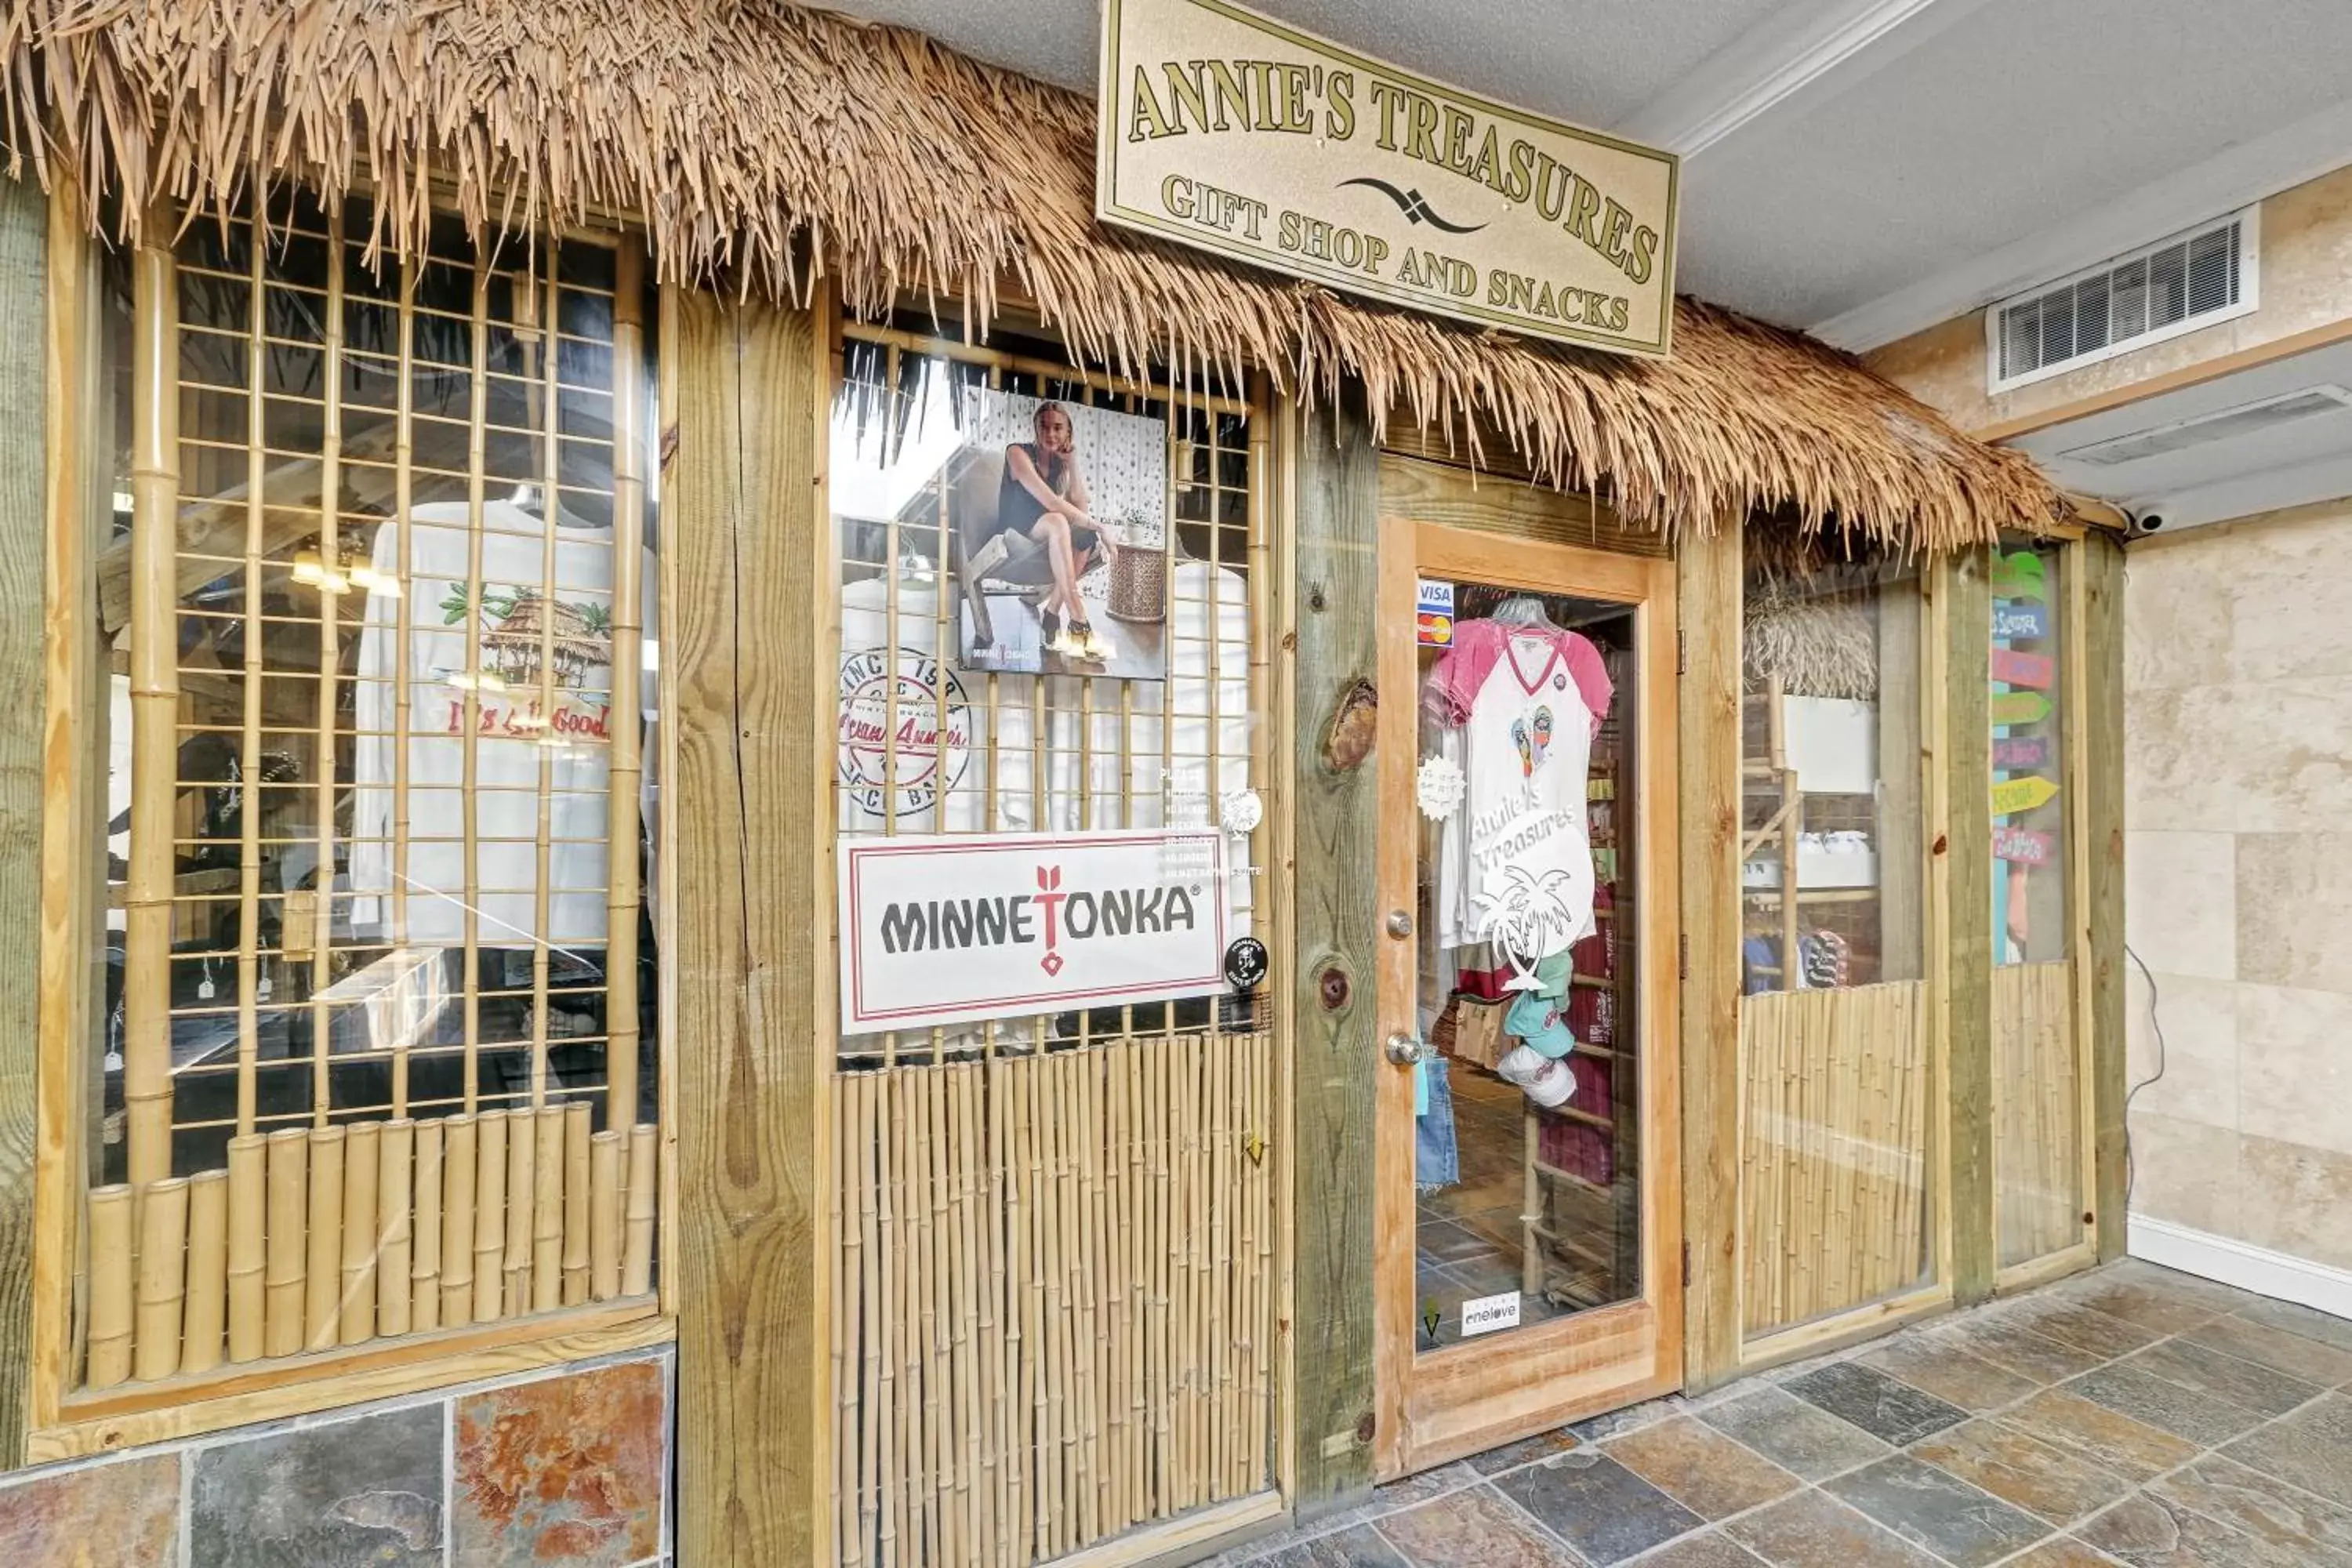 On-site shops in Ocean Annie's Resorts